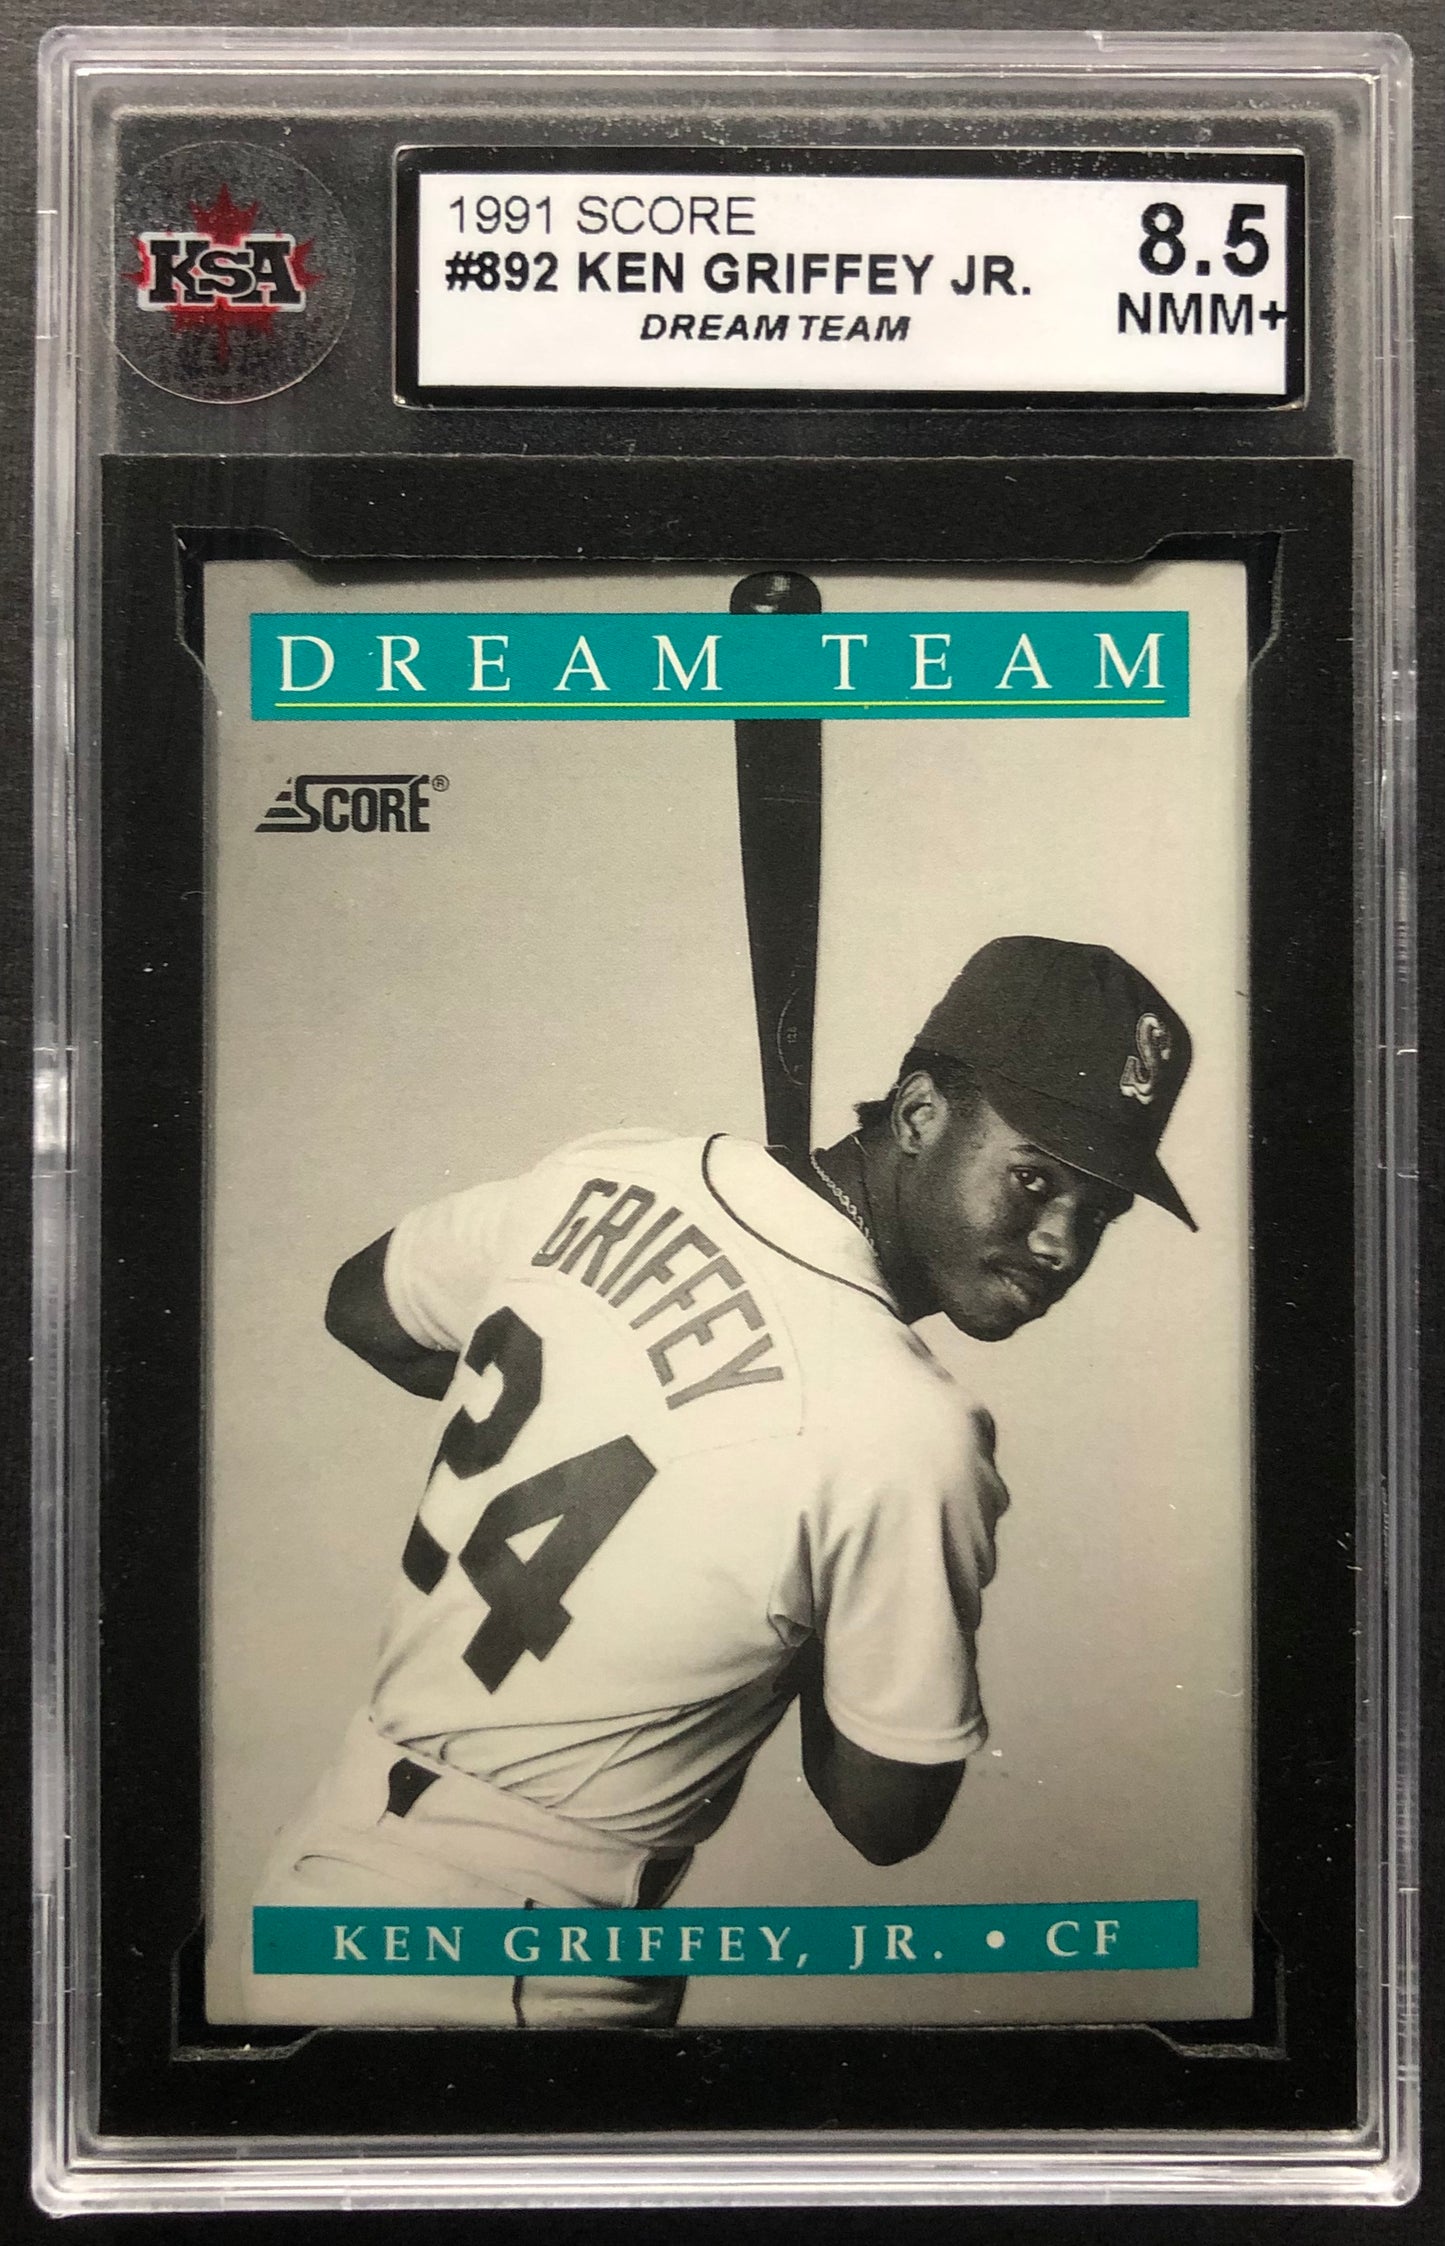 1991 Score #892 Ken Griffey Jr. - Dream Team